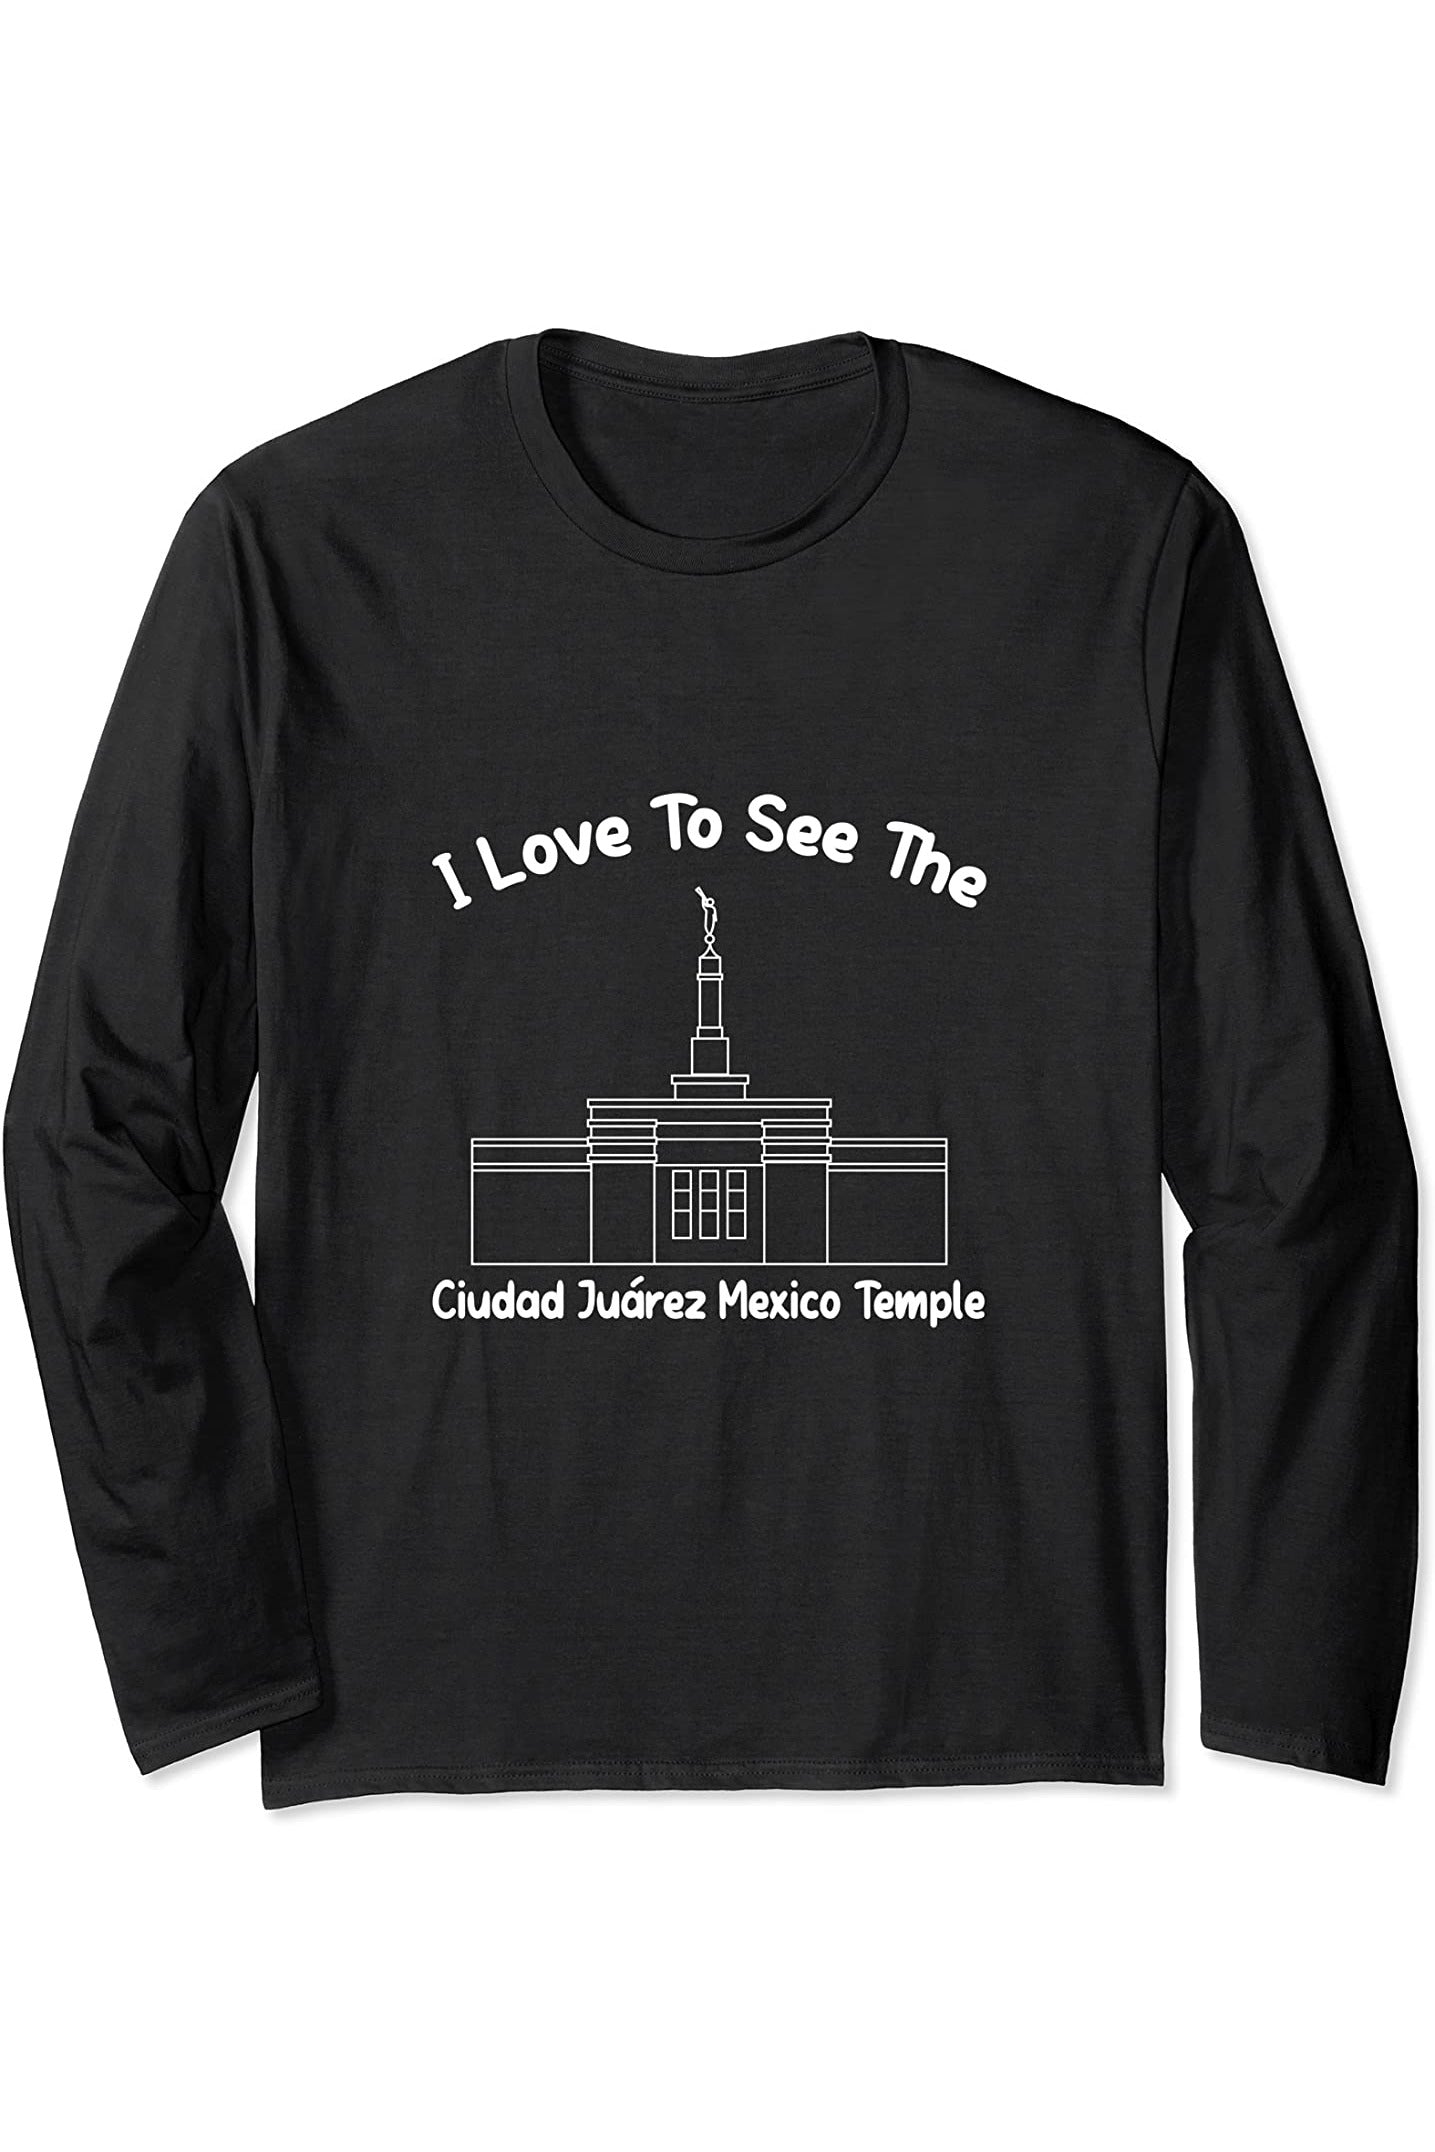 Ciudad Juarez Mexico Temple Long Sleeve T-Shirt - Primary Style (English) US